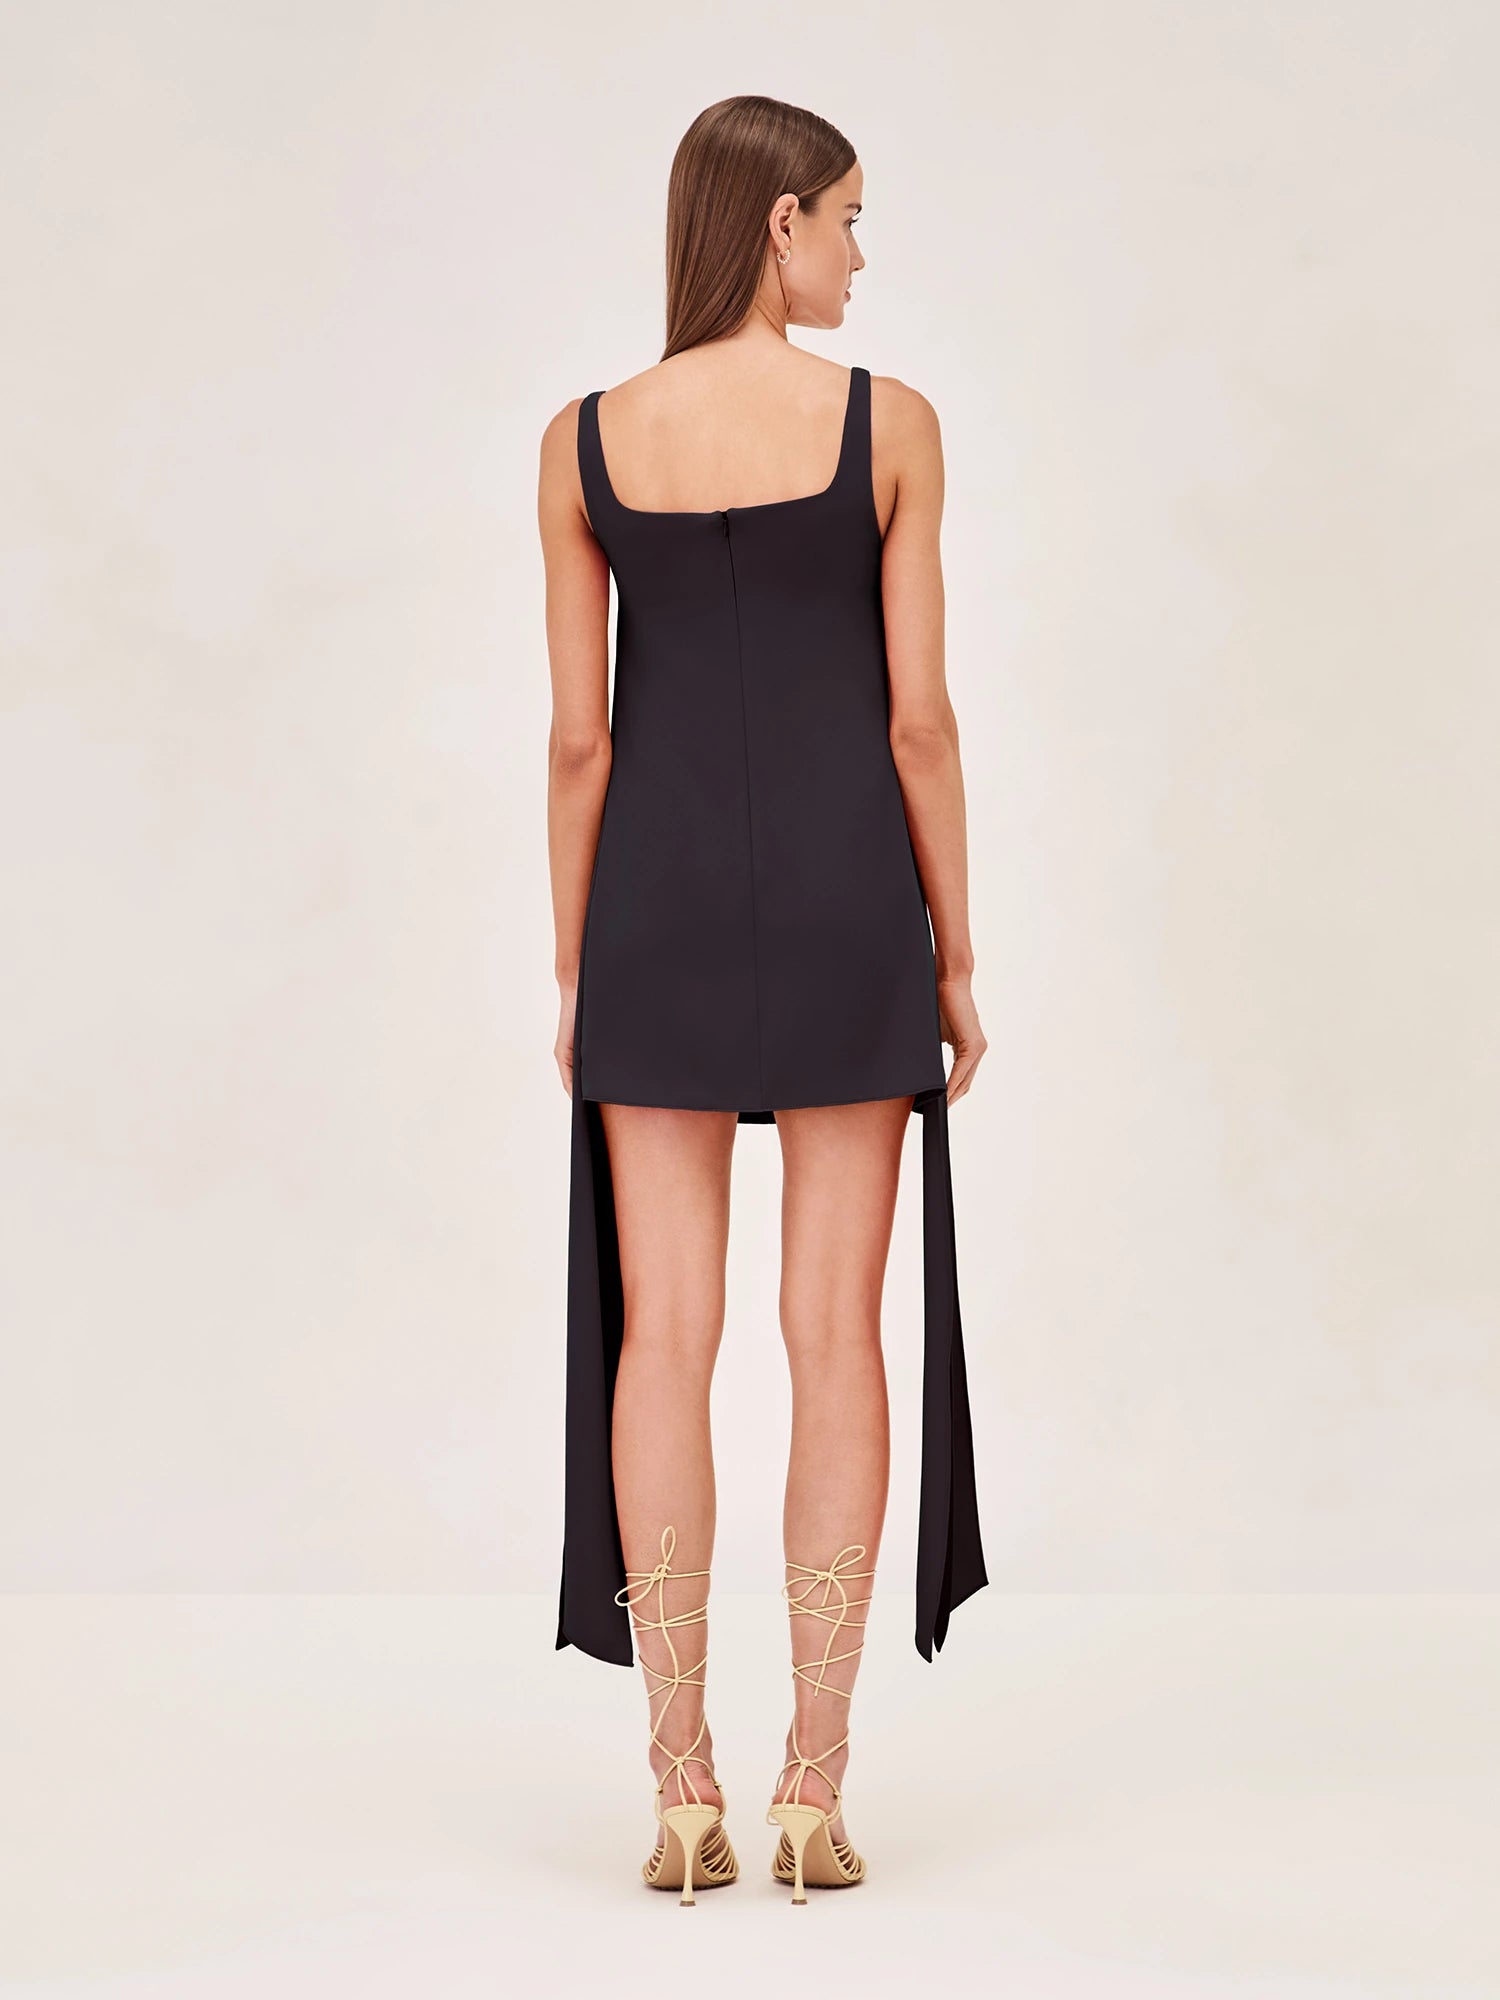 Alexis Hazel sleeveless mini dress in black back image